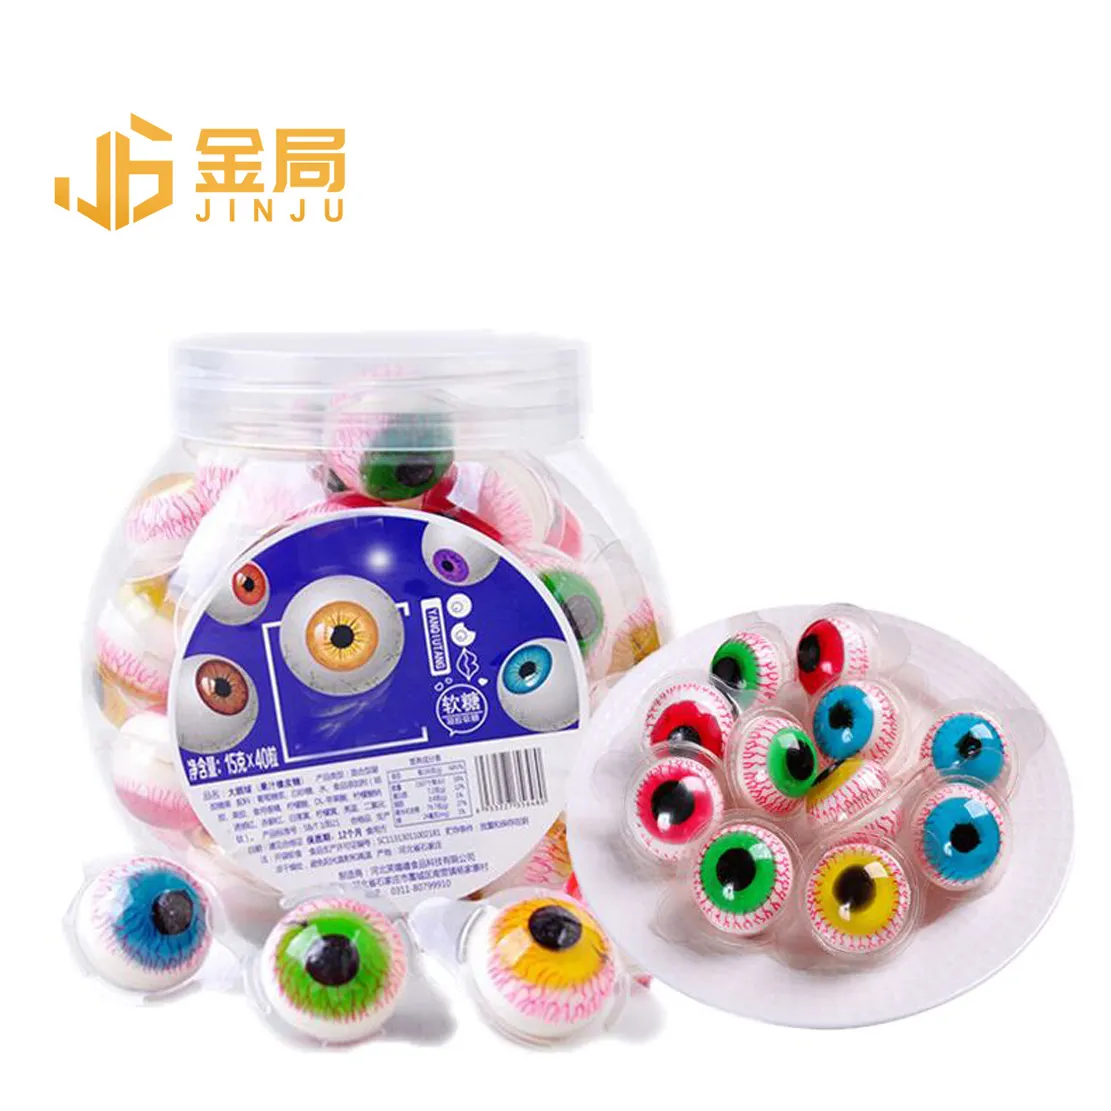 Großhandel individuelle 3D-Augenkugeln Halal süßer Ausschlag Gummibärchen-Befüllung gelee-Süßigkeit Augenkugeln Gummibärchen